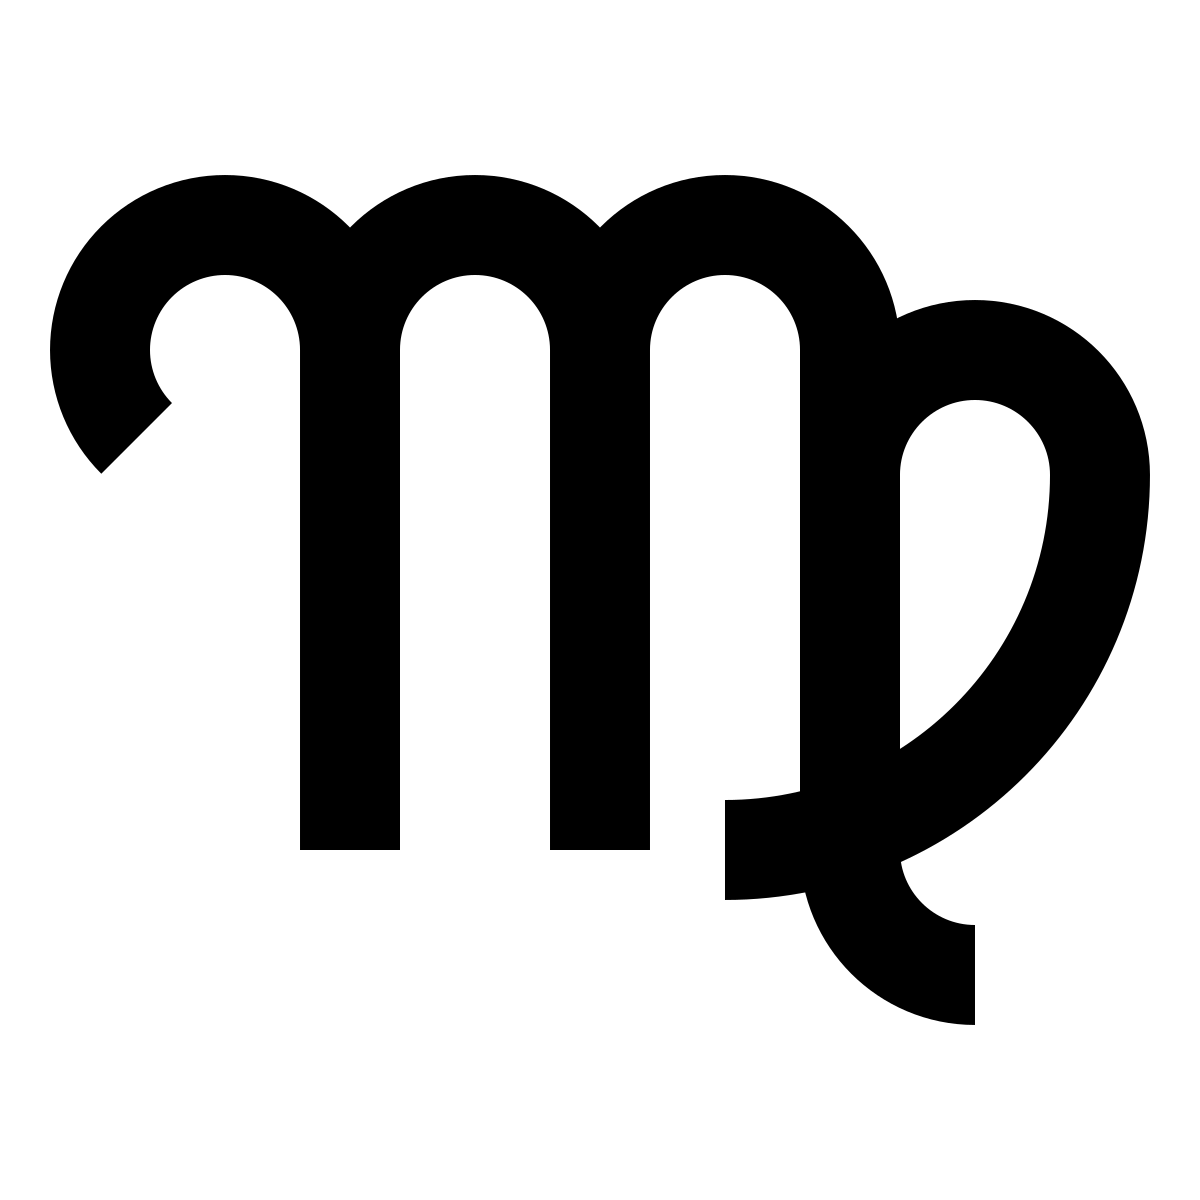 Virgo symbol image